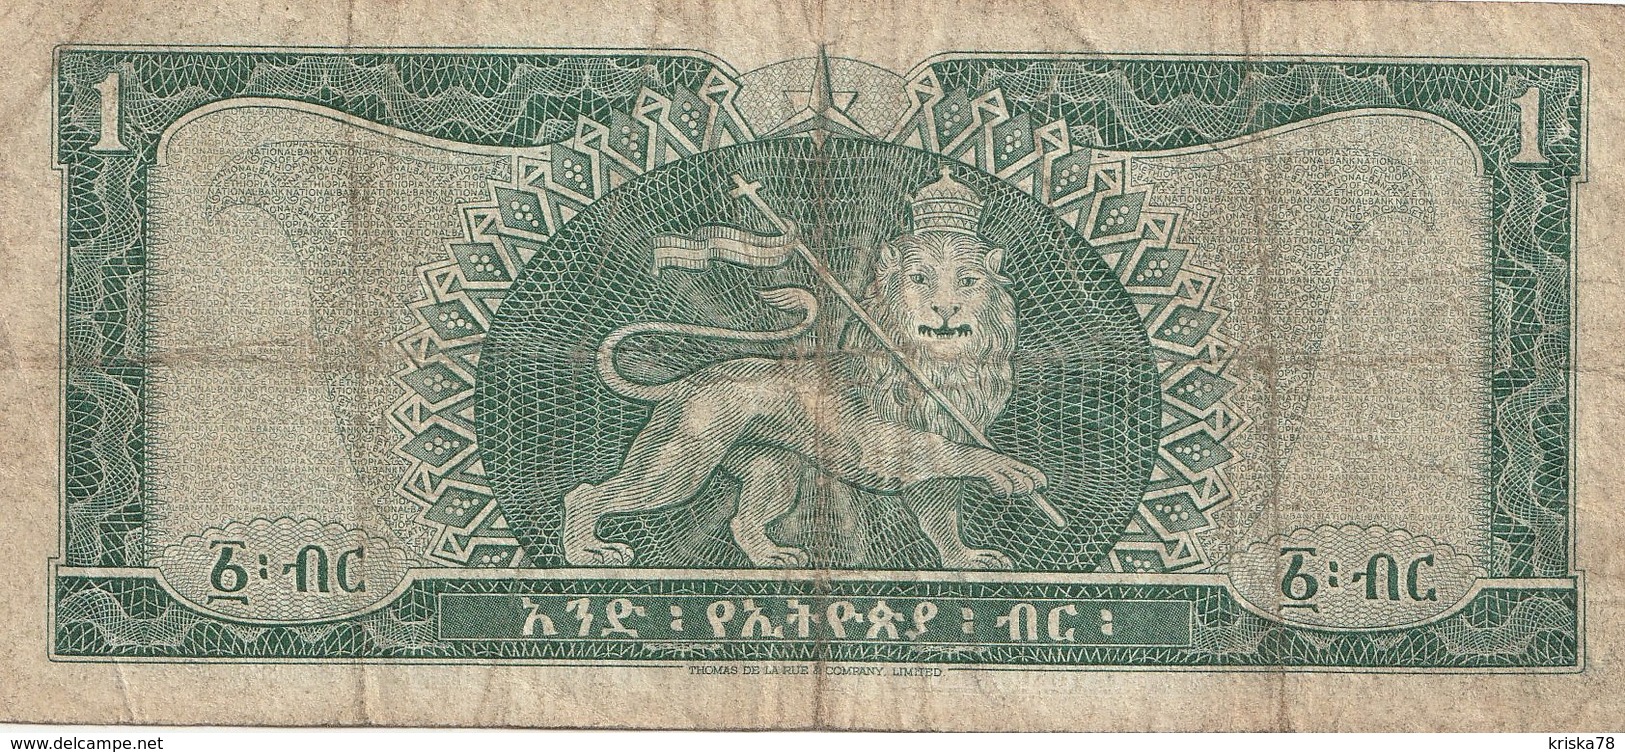 1 DOLLAR 1966 - Aethiopien